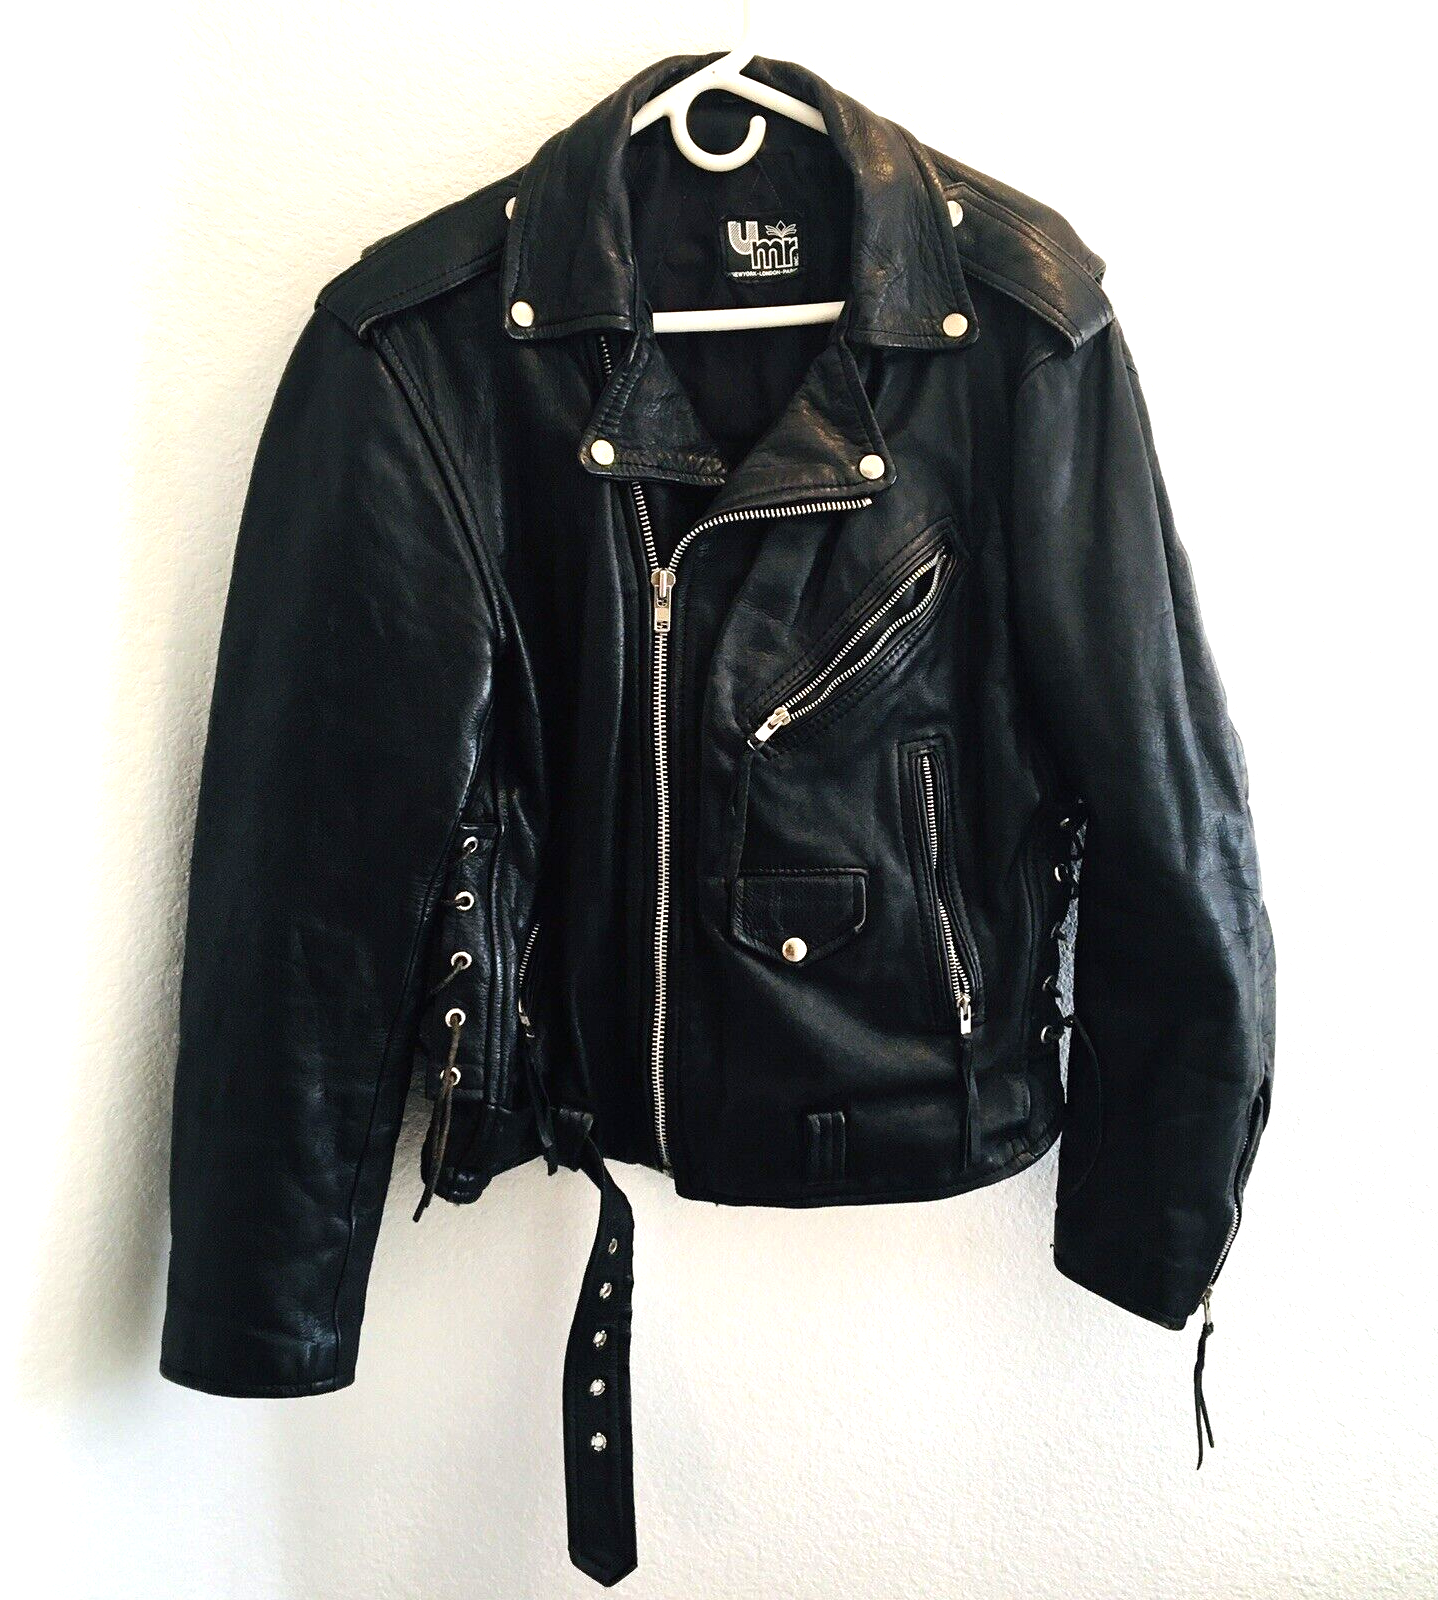 Primary image for Vtg 80s U Mr Inc Leather Jacket Motorcycle Biker Rider Zip Blk Measurement Below